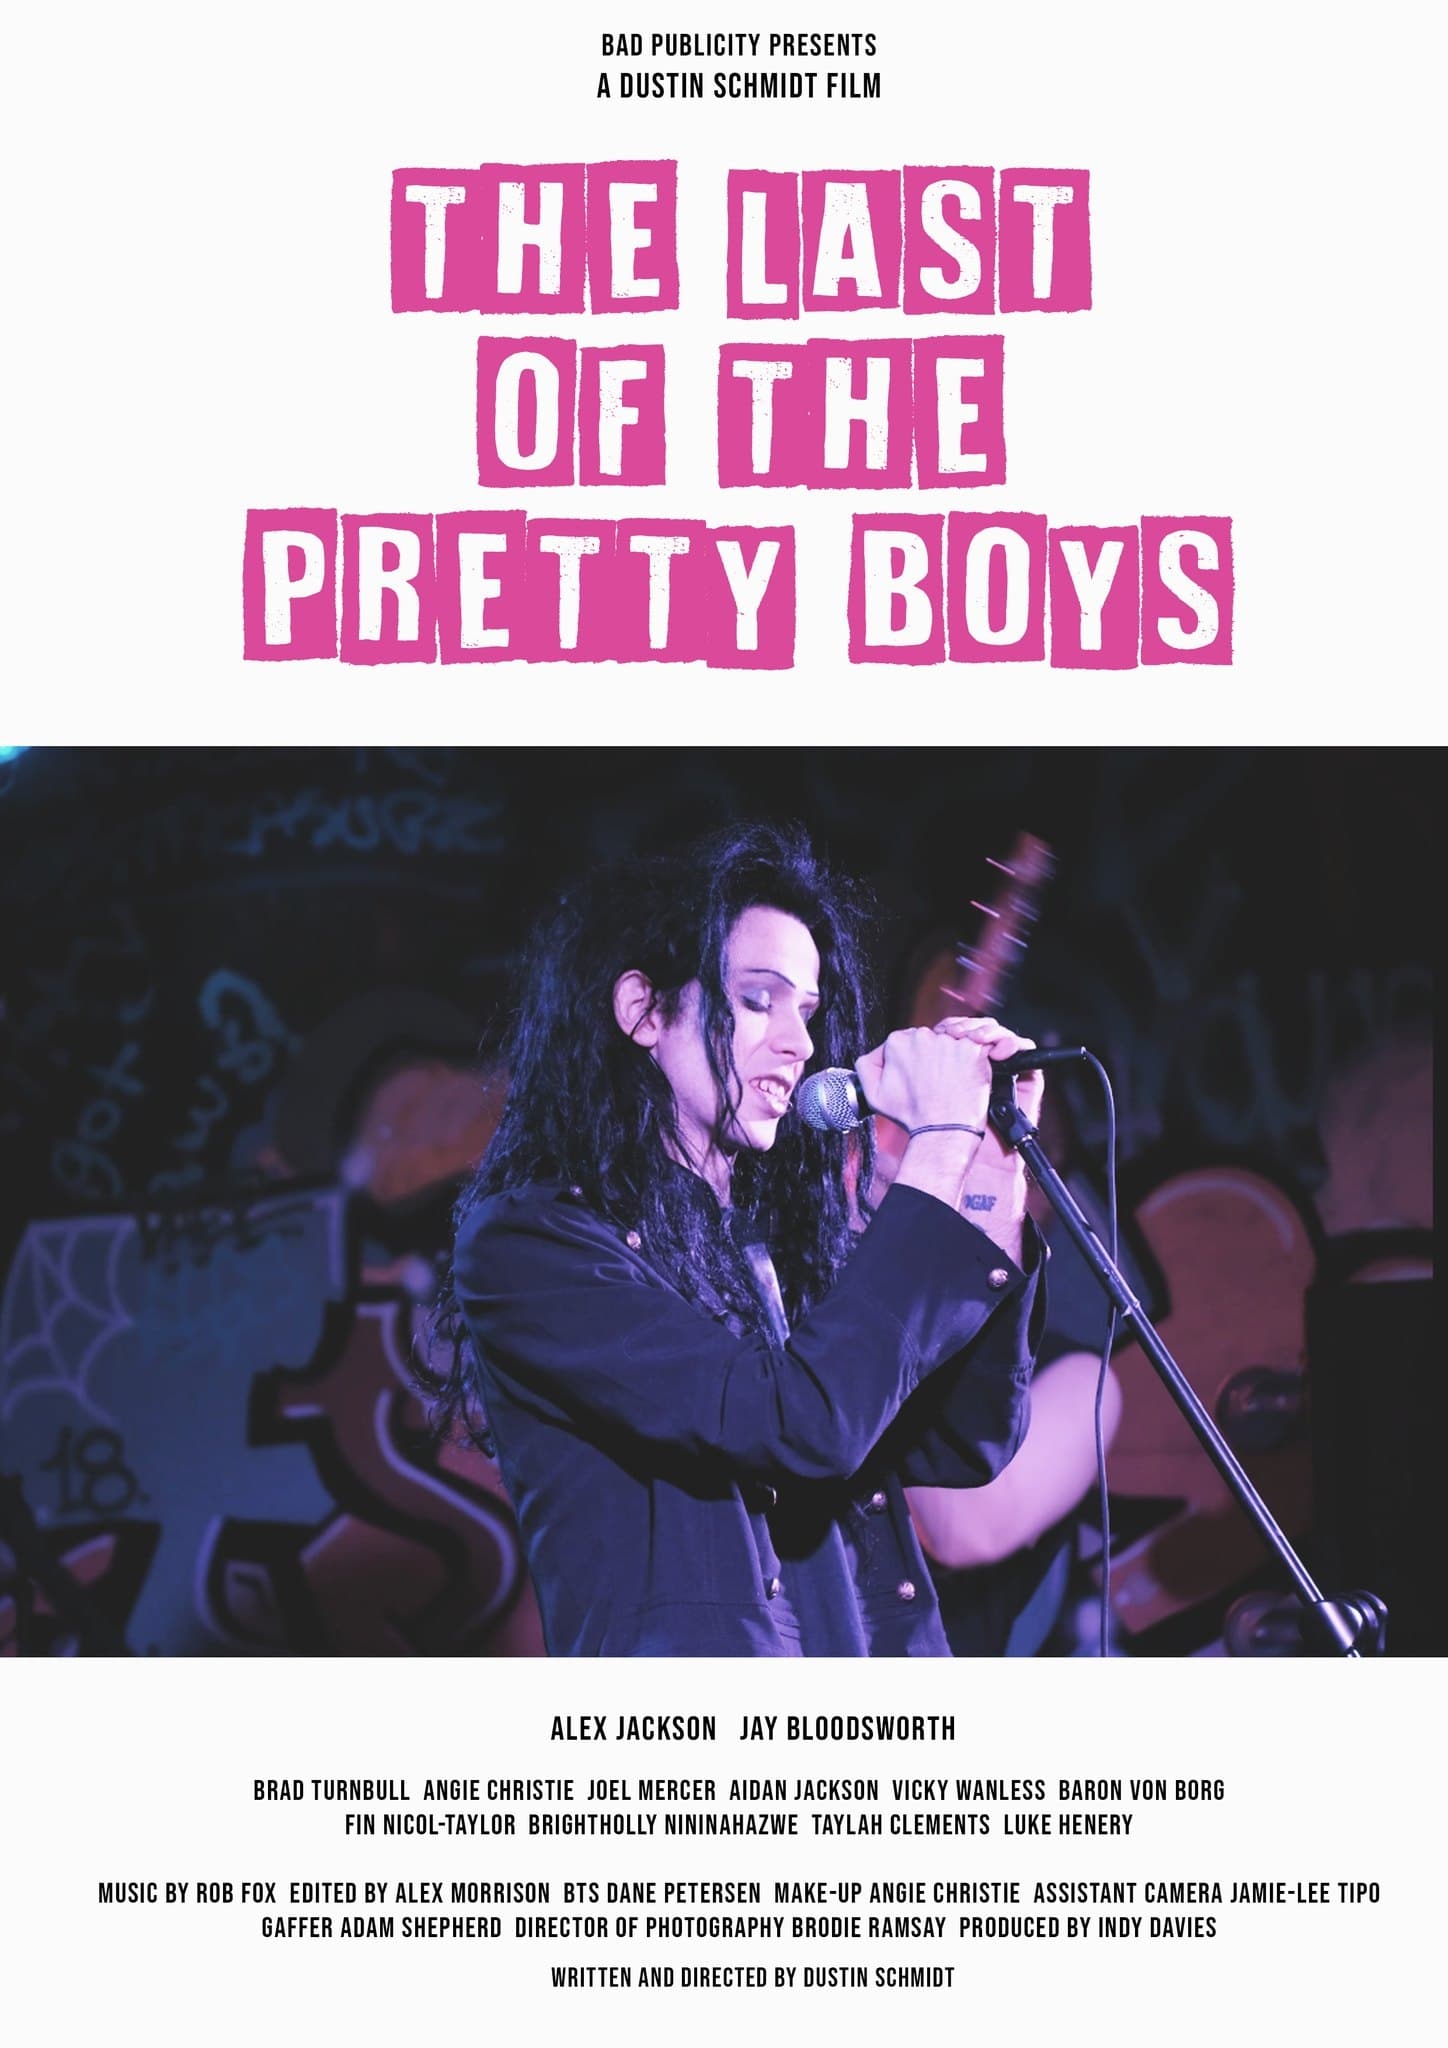 The Last of the Pretty Boys